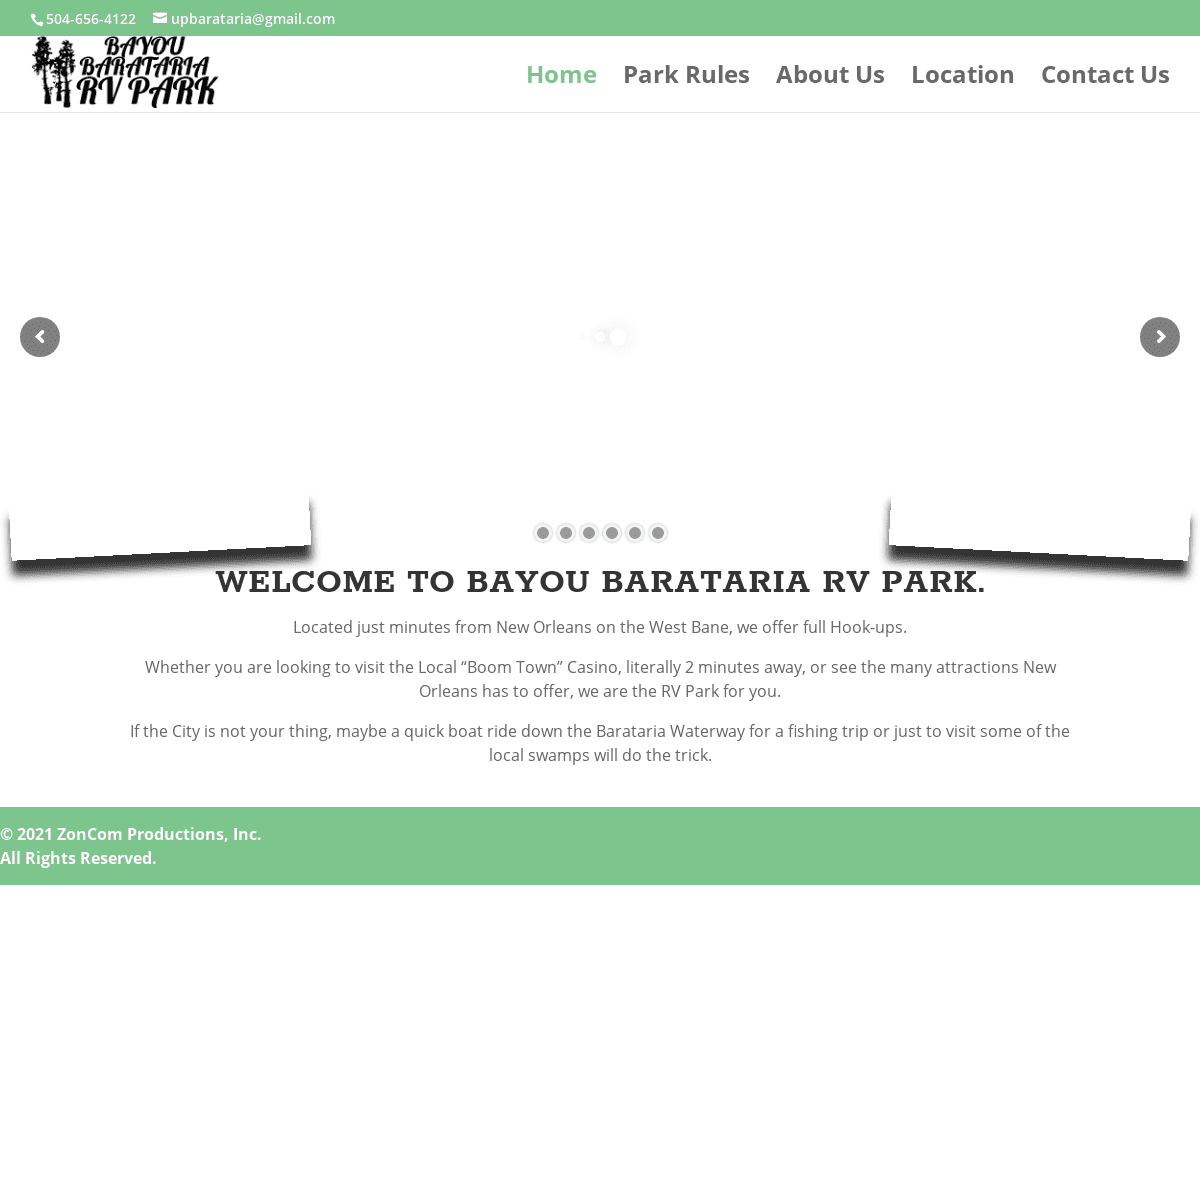 A complete backup of https://bayoubaratariarvpark.com